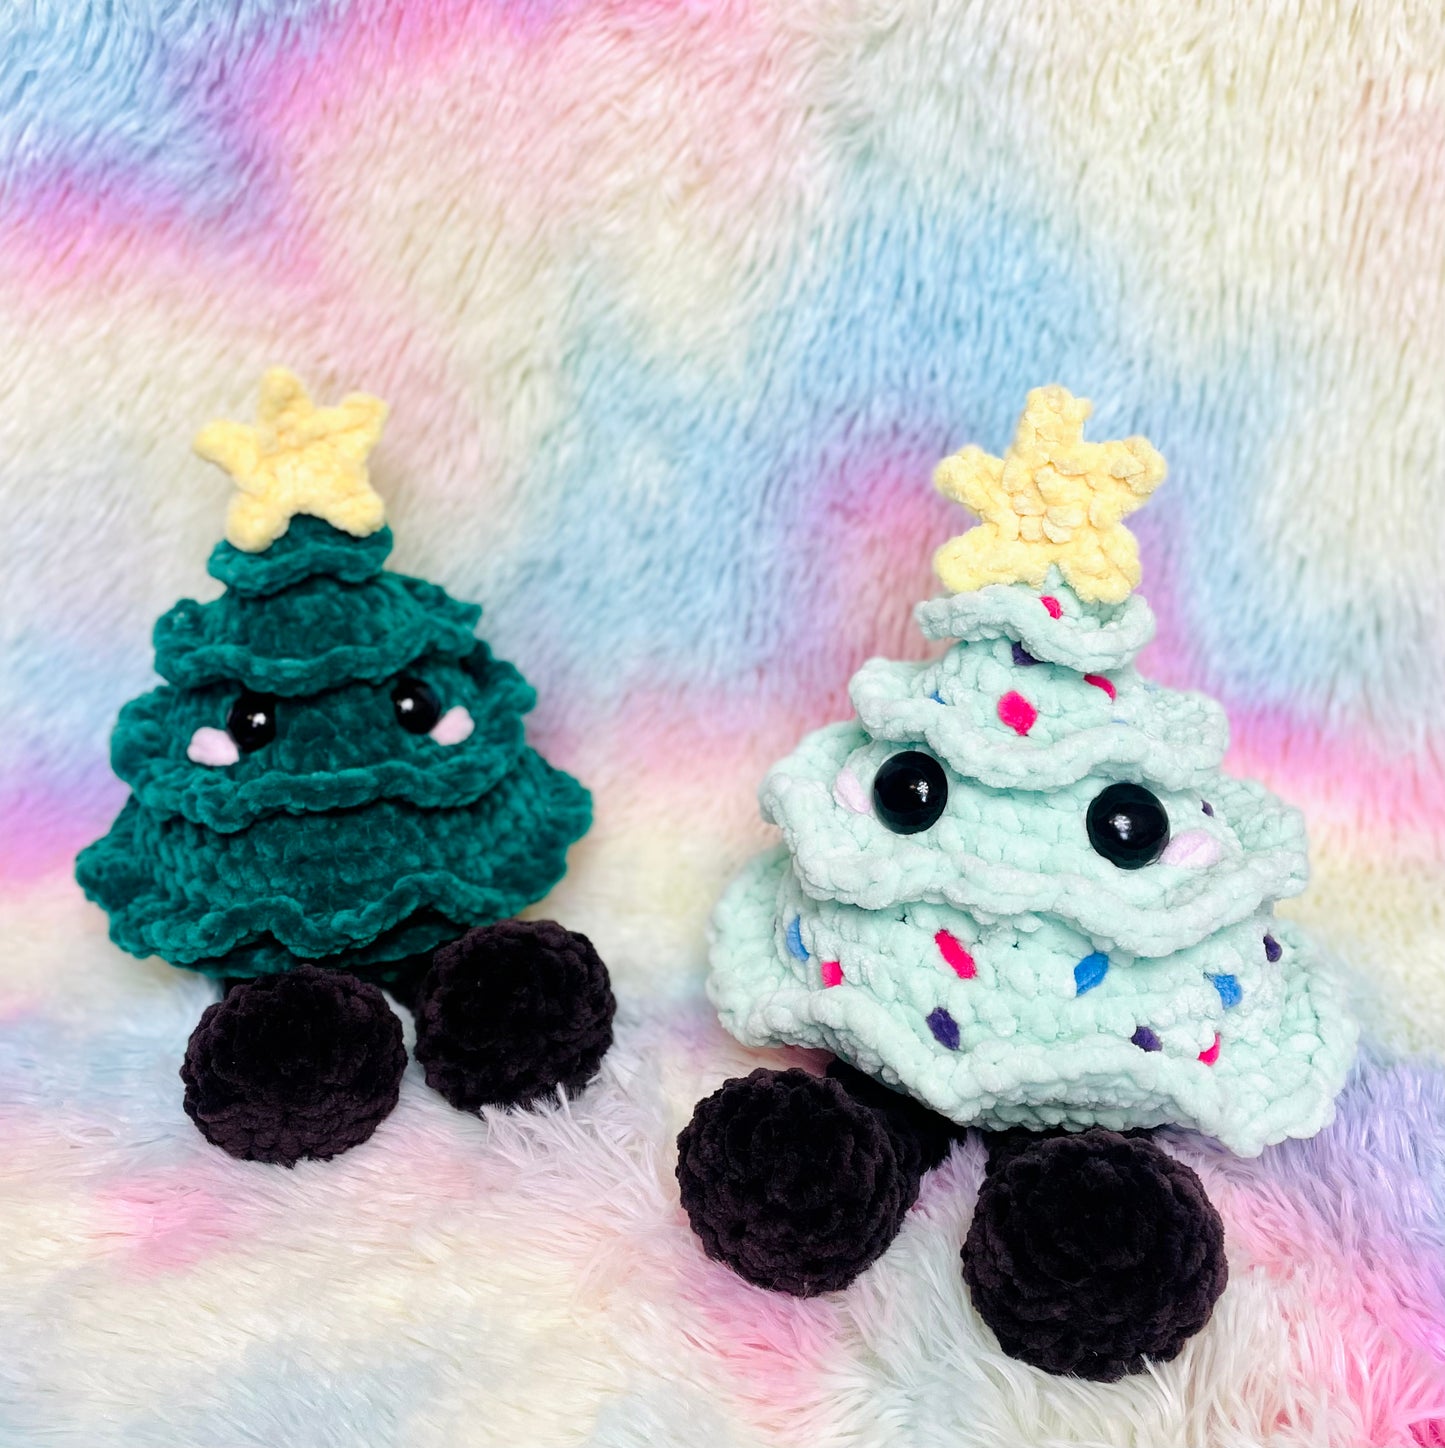 Spruce the Christmas Tree Crochet Pattern Digital File